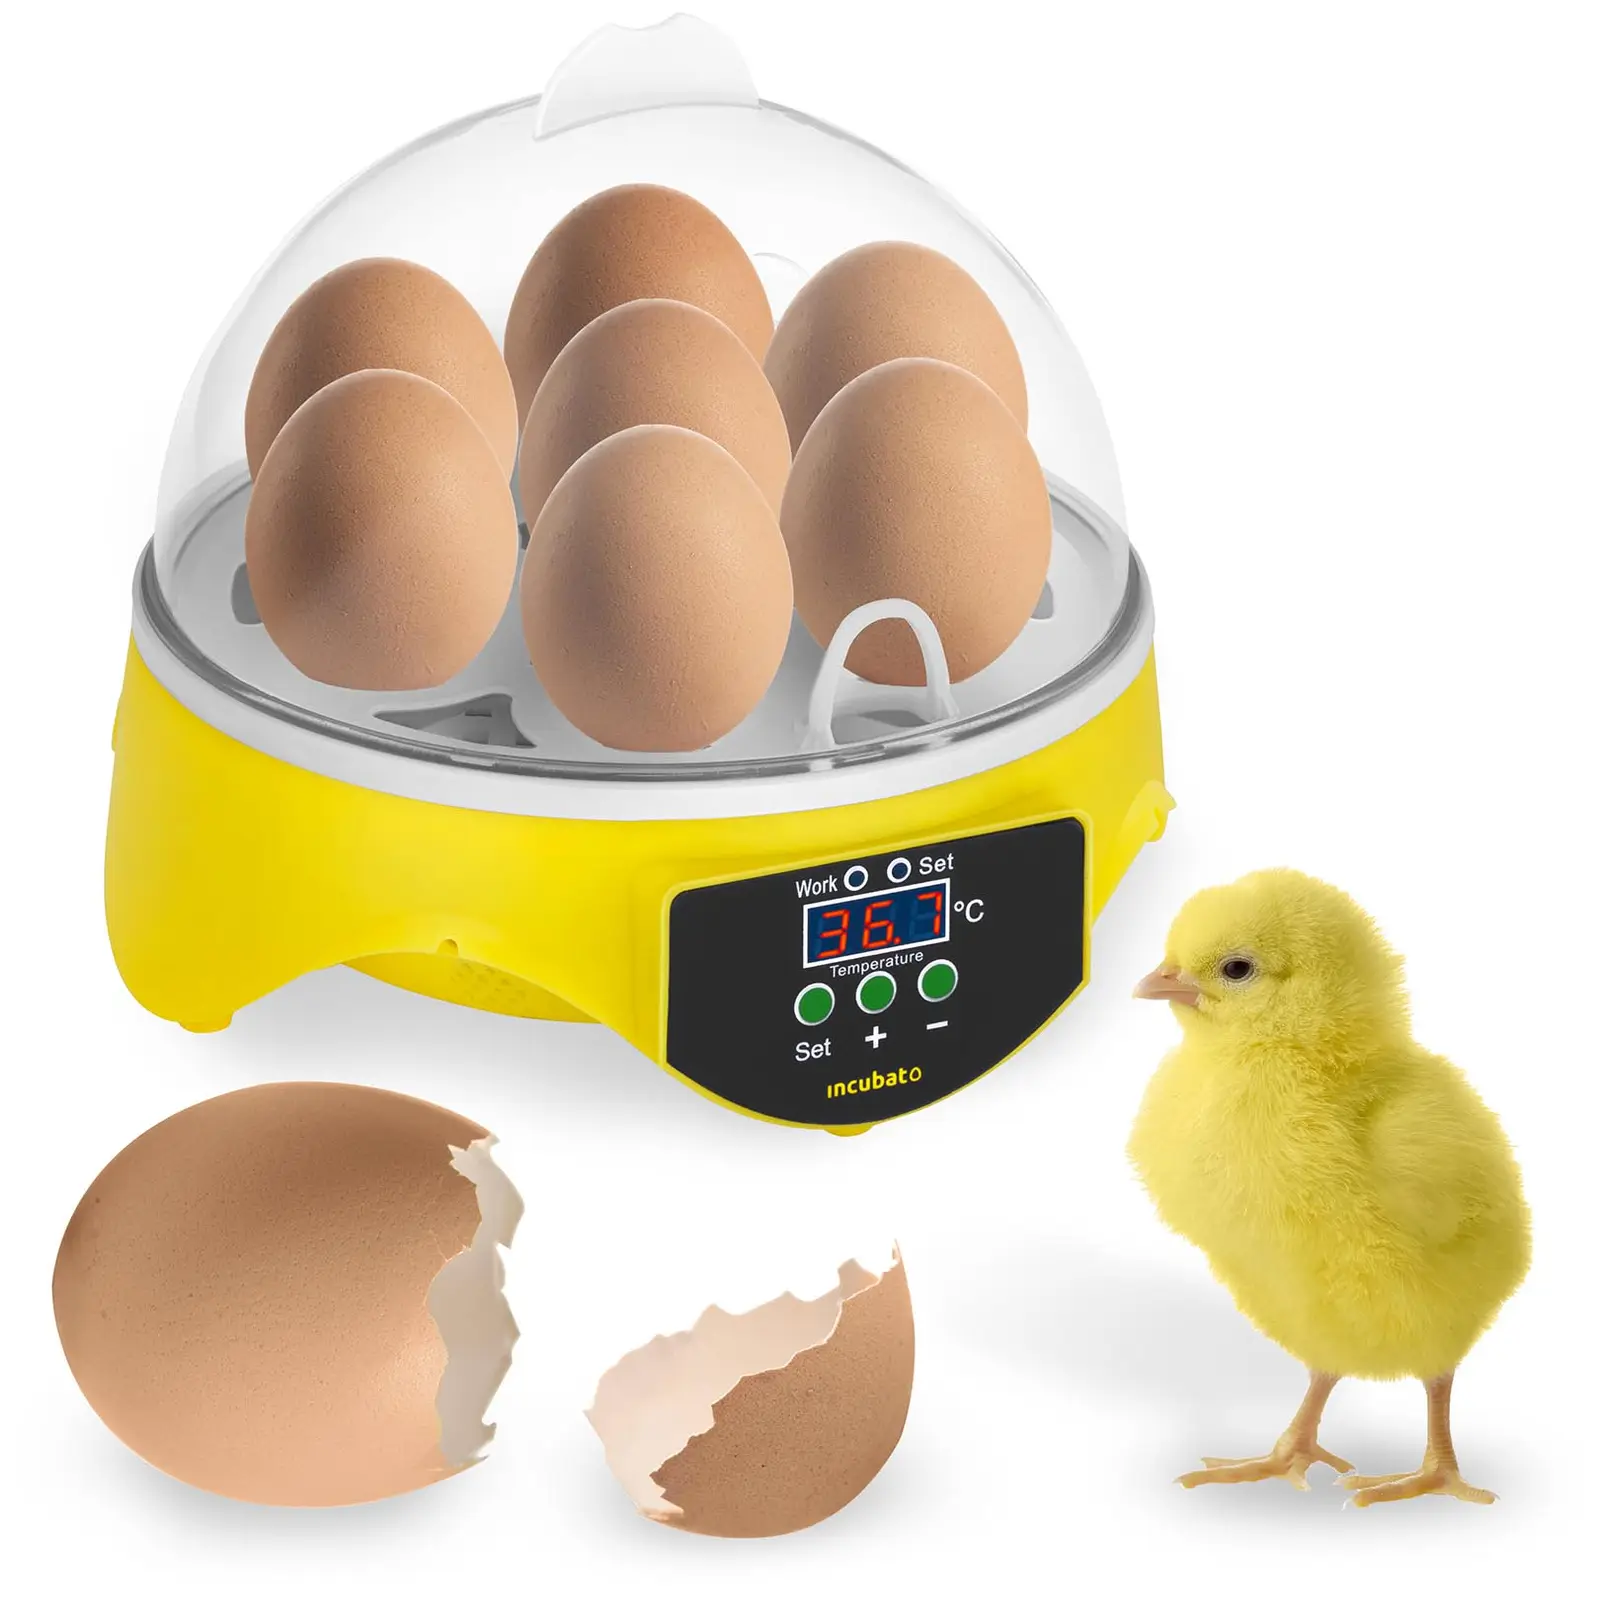 Couveuse à œufs - 7 œufs - Mire-œufs inclus | incubato